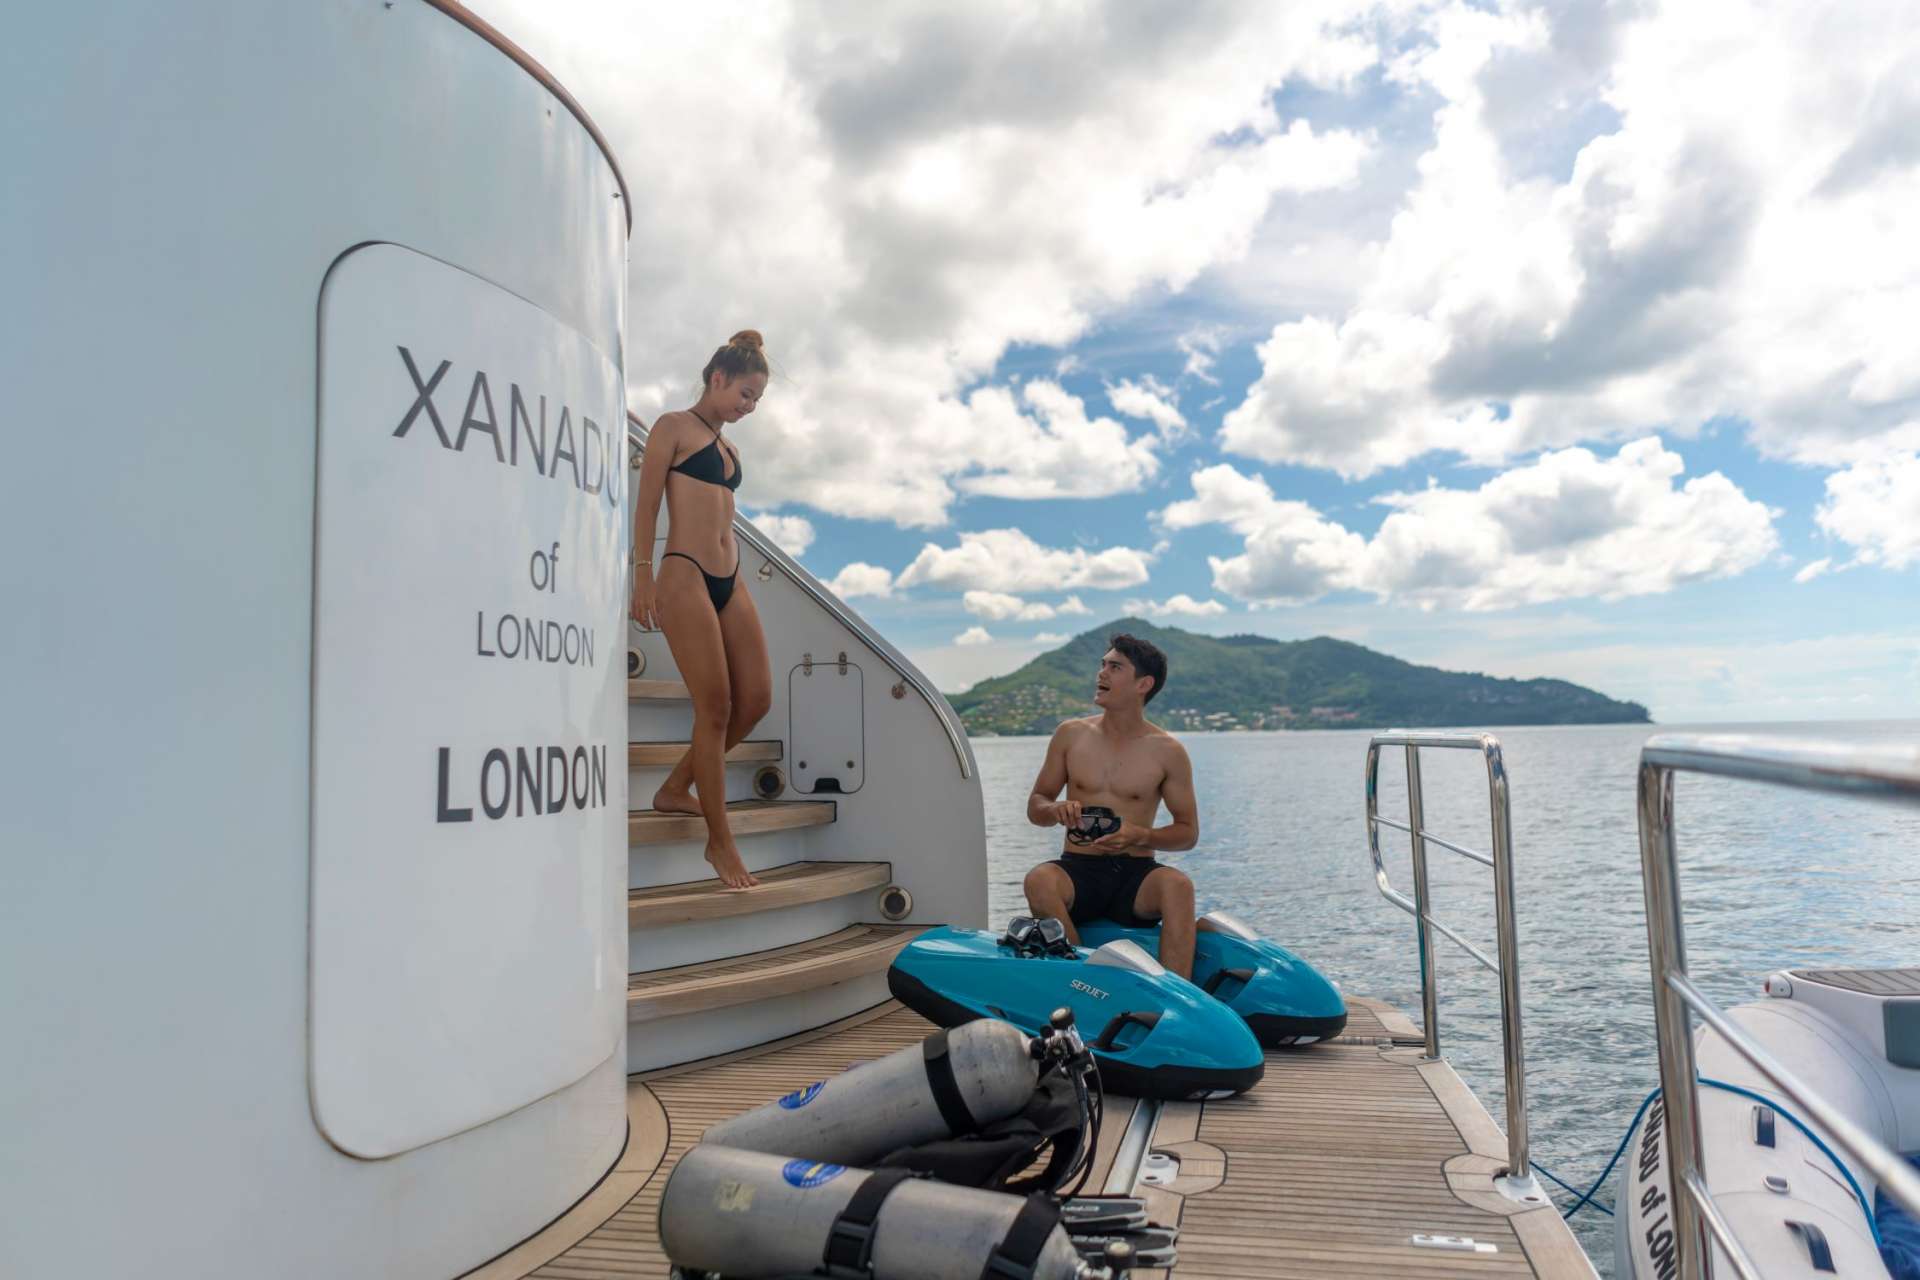 xanadu of london - Yacht Charter Langkawi & Boat hire in SE Asia 5